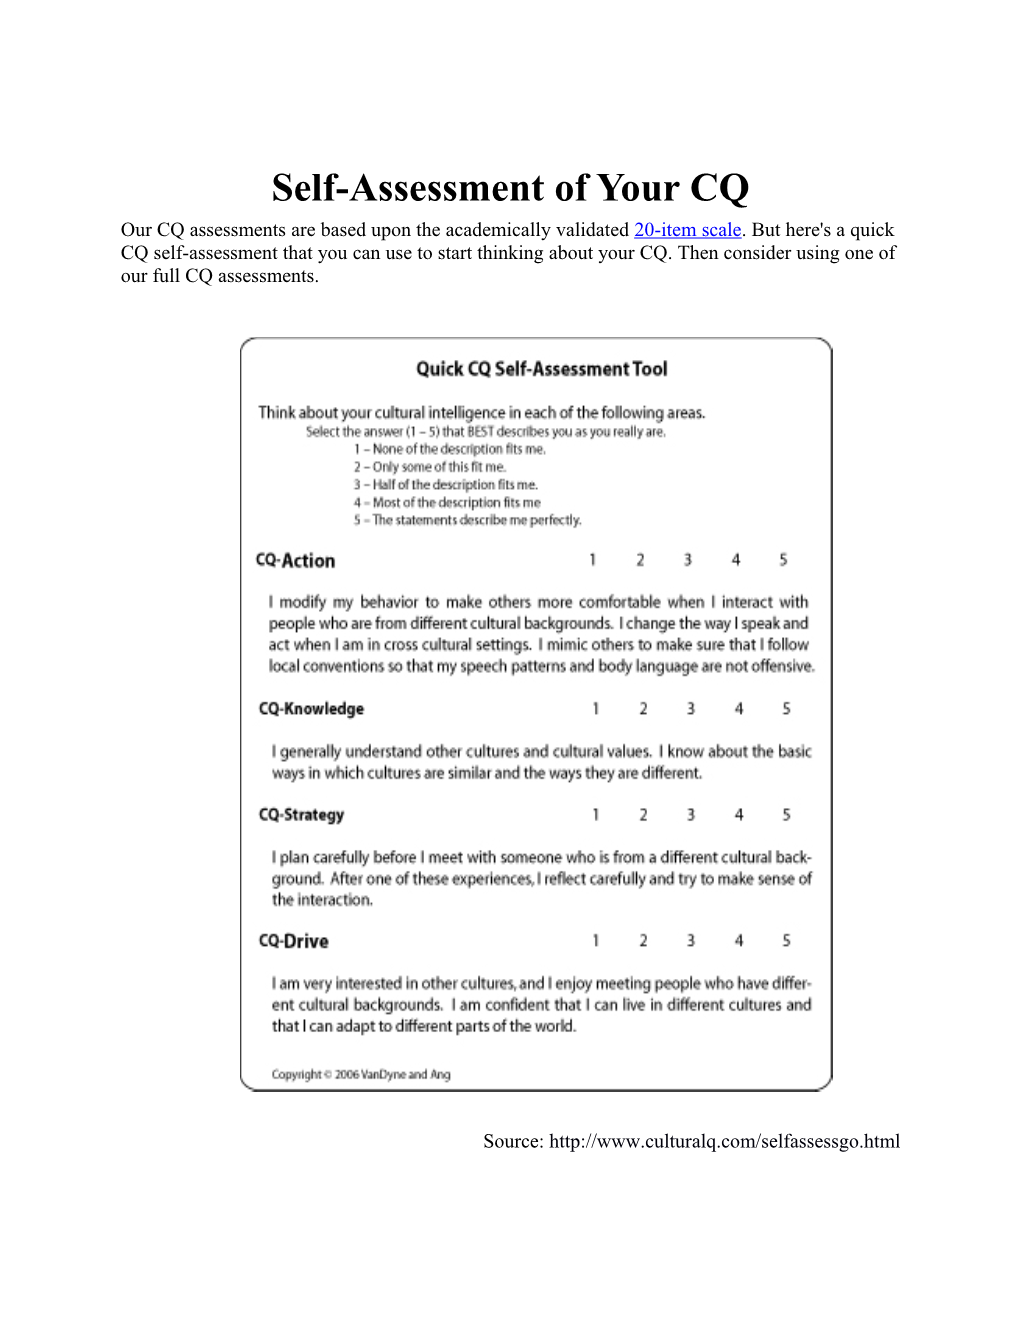 Interpreting Your Quick CQ Self-Assessment Responses